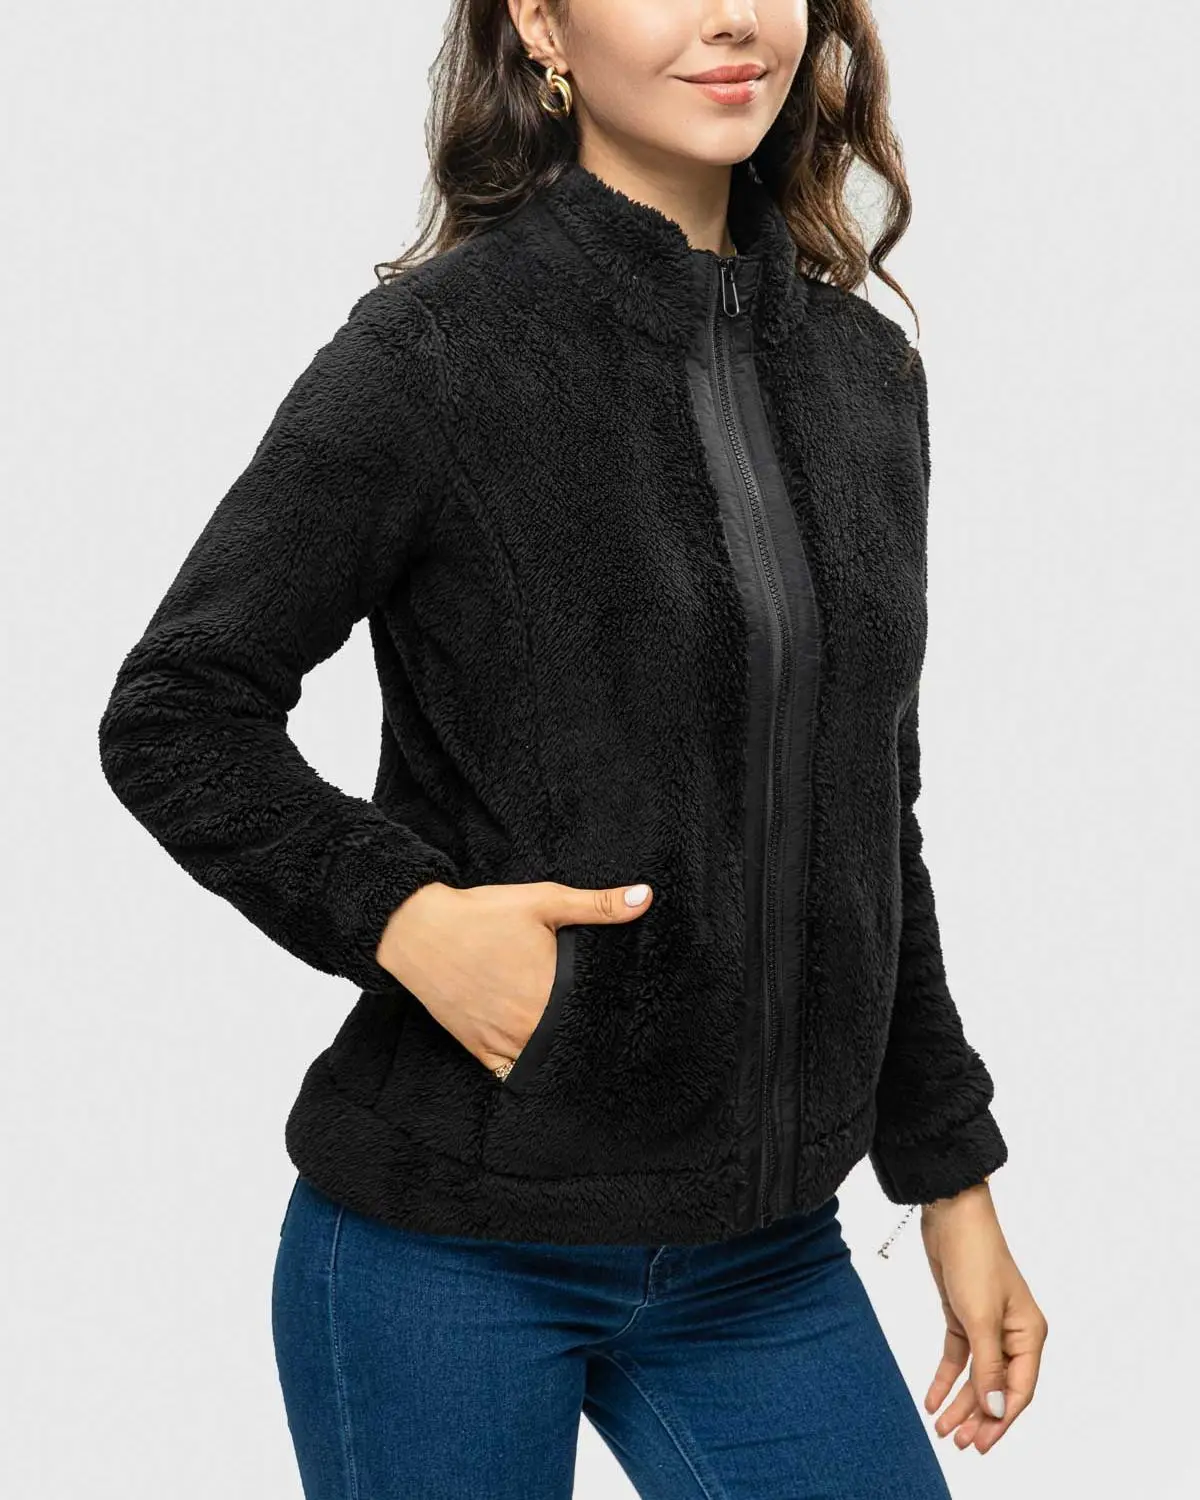 

FASHIONSPARK Women's Zipper Sherpa Fleece Plush Jacket Sweatshirt Pullover Fuzzy Coat Long Sleeve Soft Warm Coat with Pockets